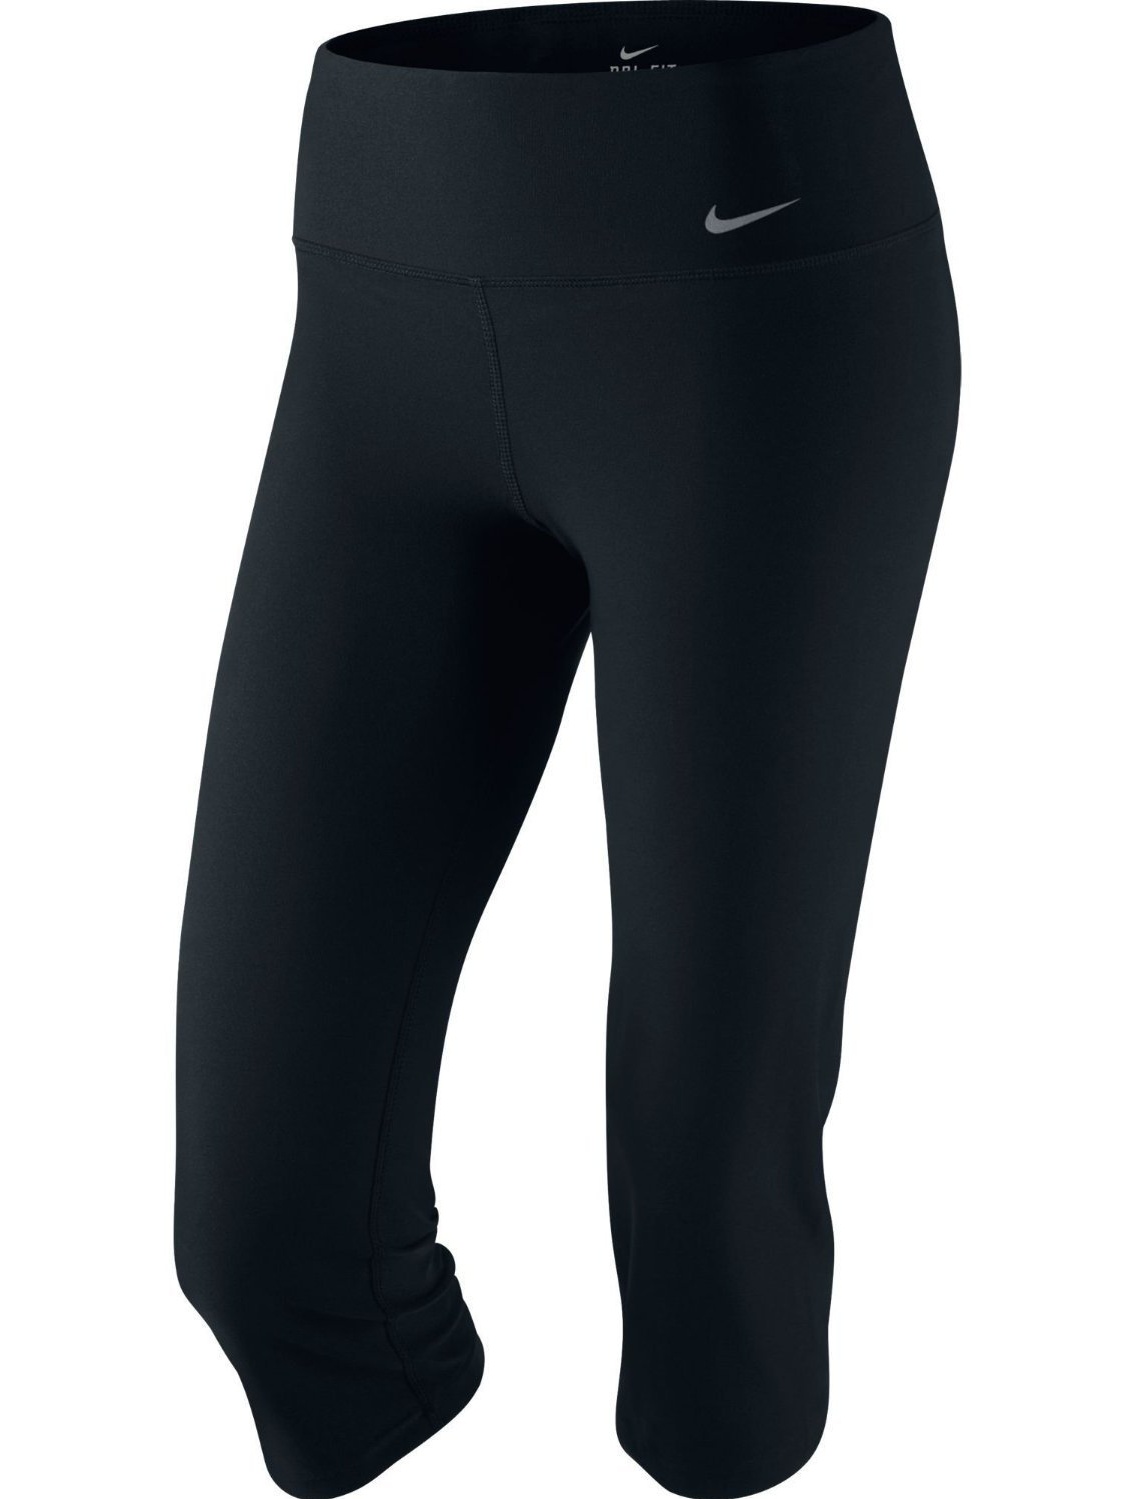 Nike Women's Dri-Fit Slim Fit Training Capris-Black - image 1 of 1